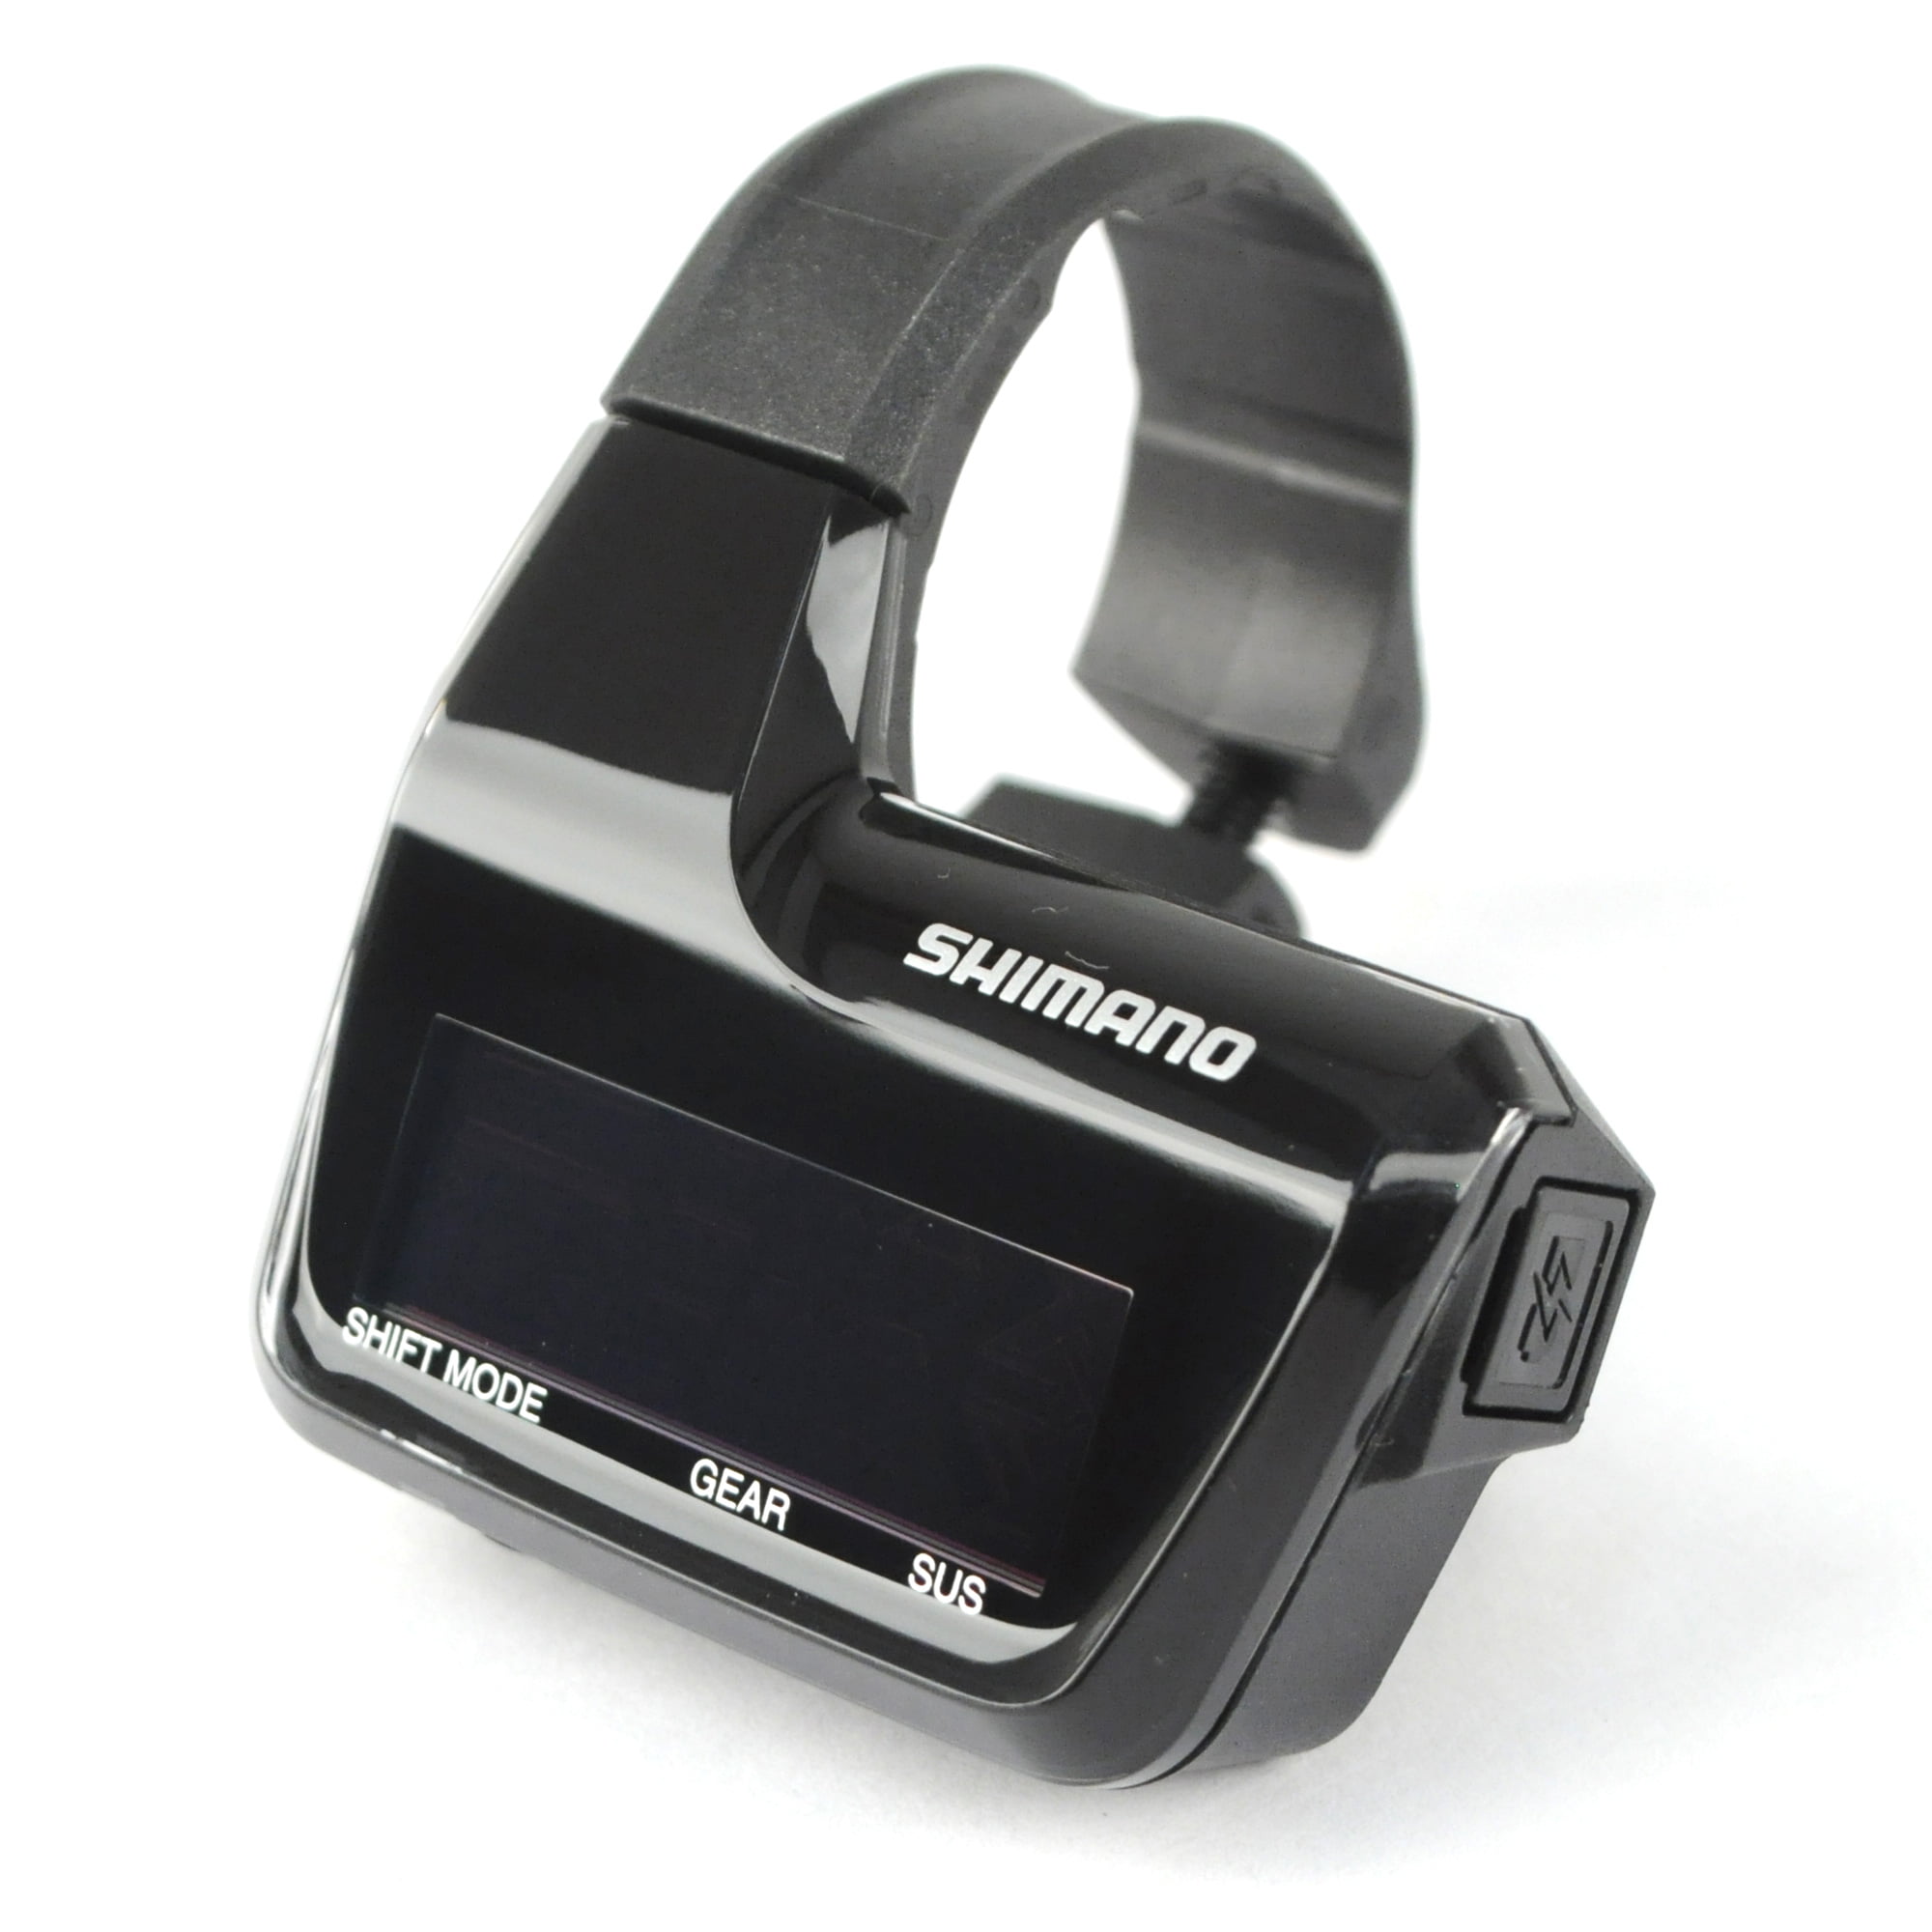 Shimano XTR Di2 System Information Display Unit SC-M9051 M9051 31.8mm 